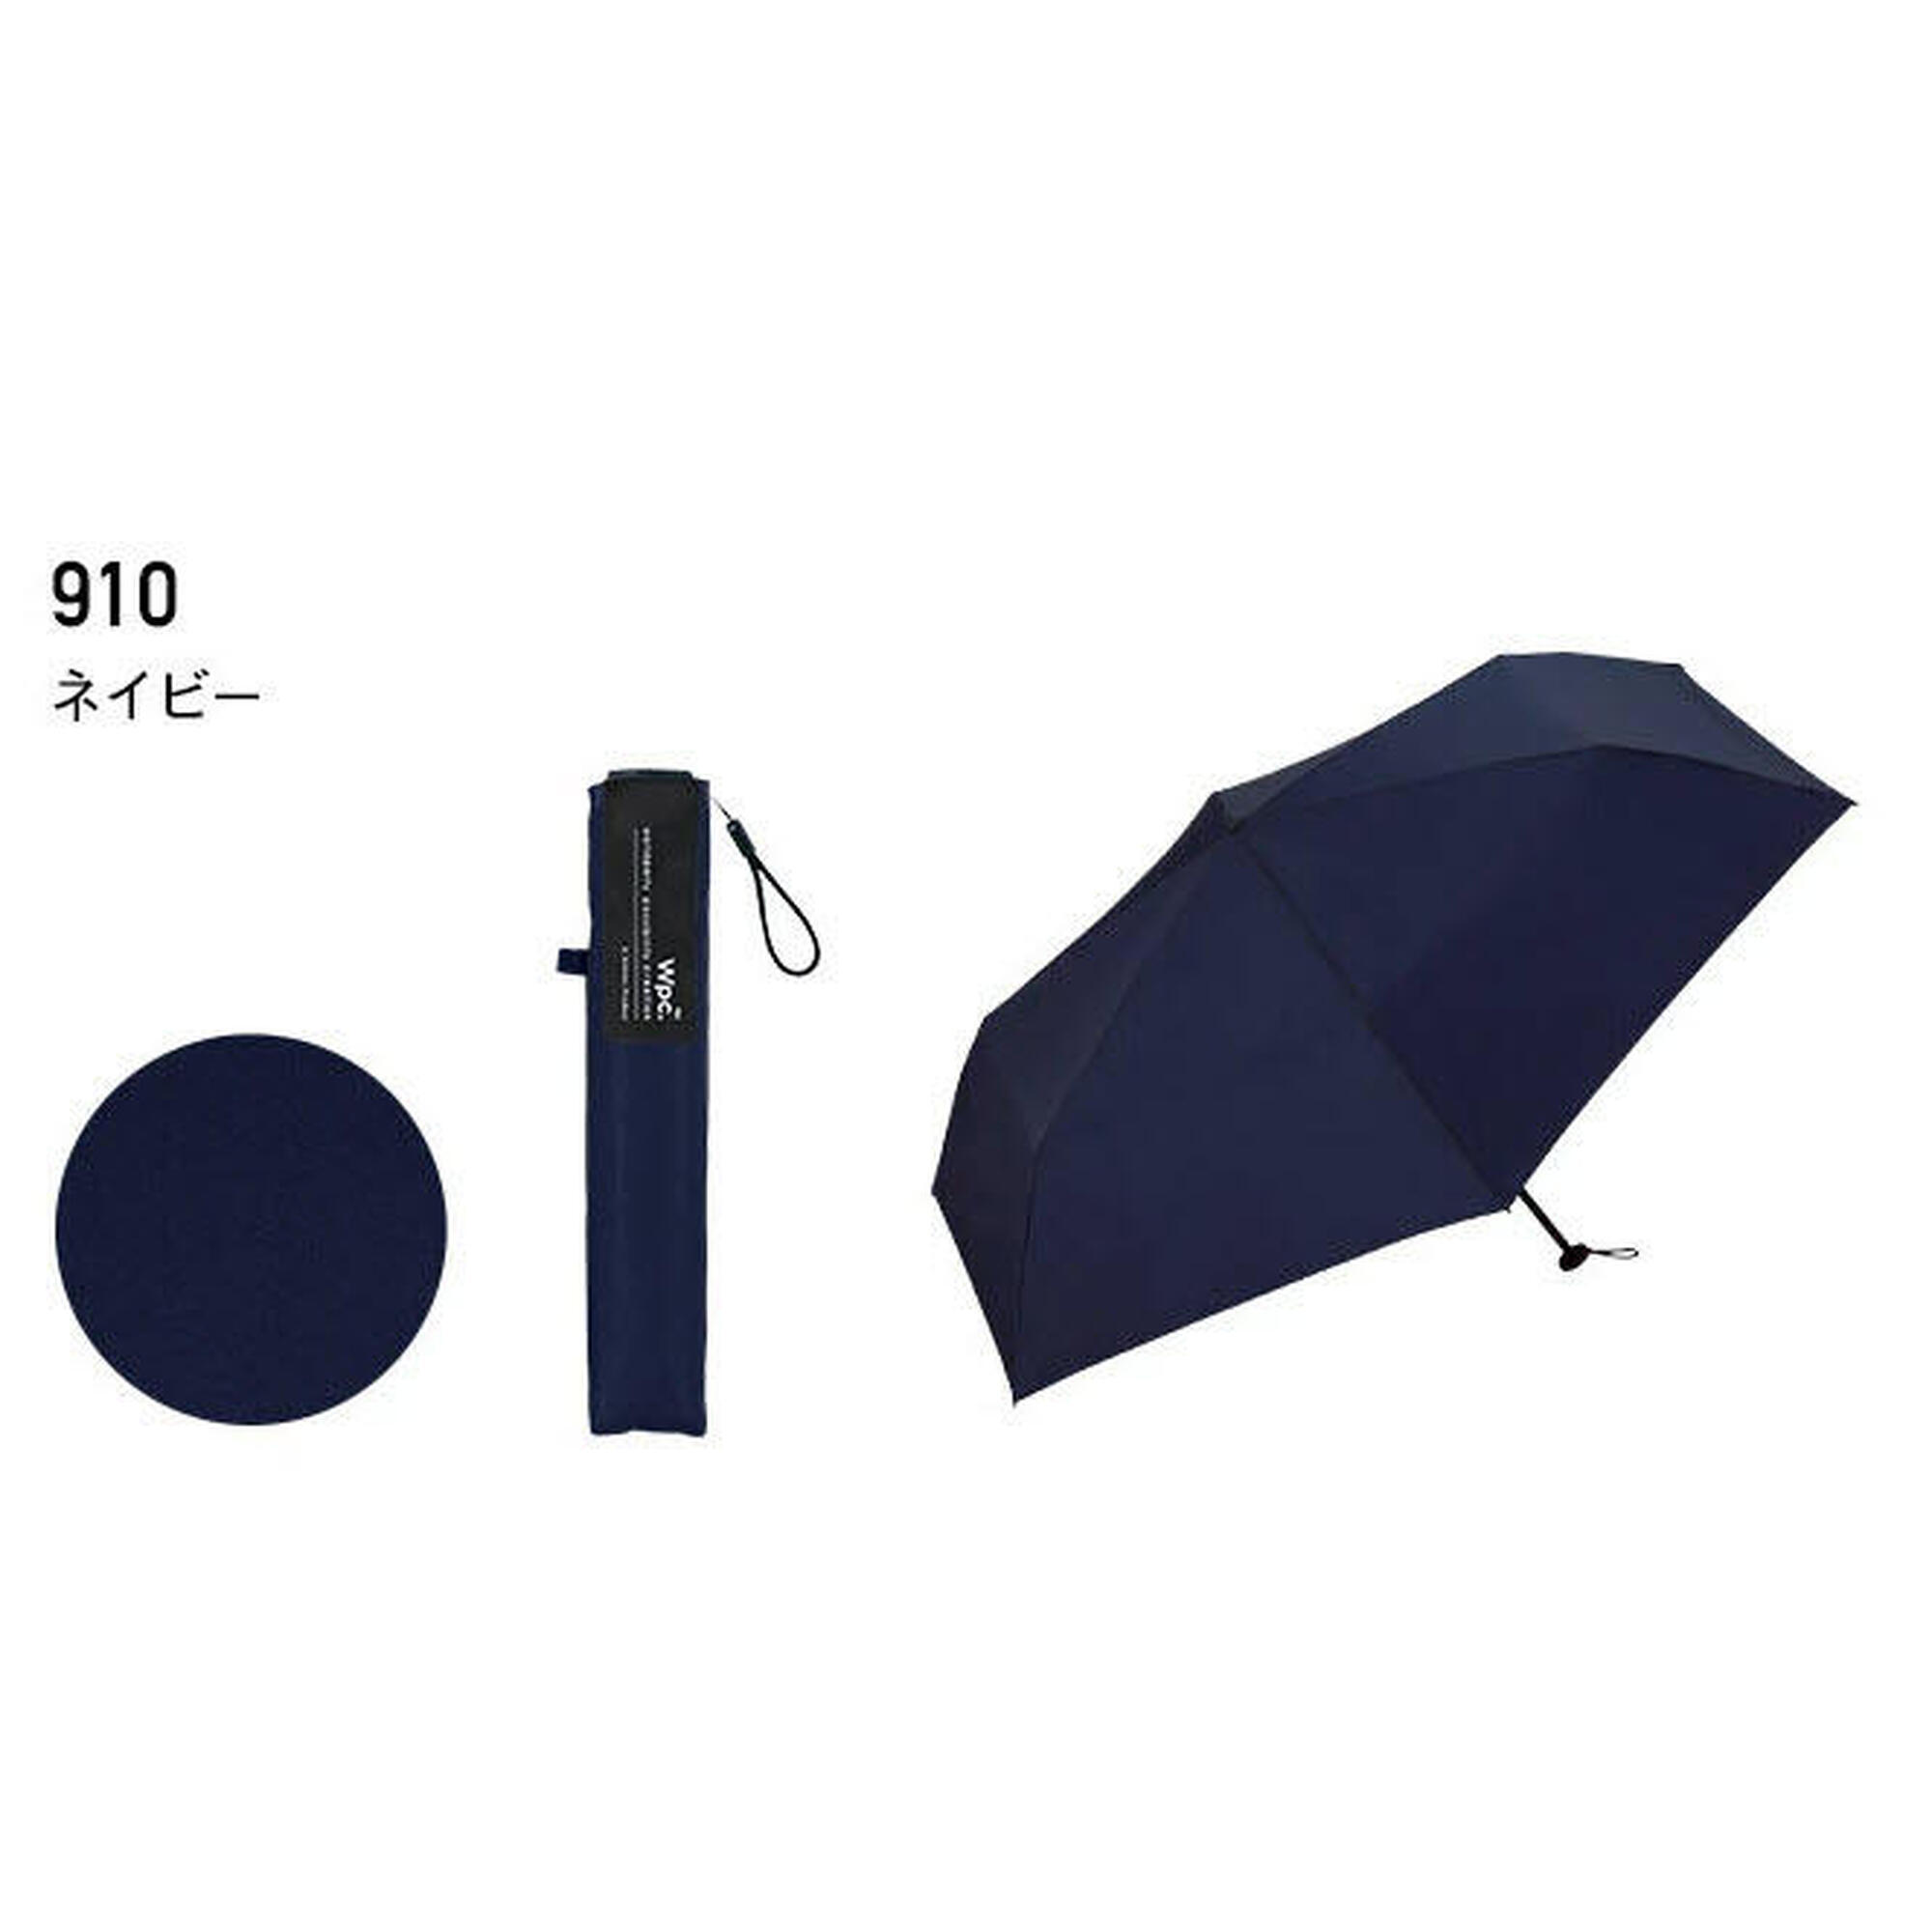 UX Series Air-Light Anti UV Folding Umbrella - Navy